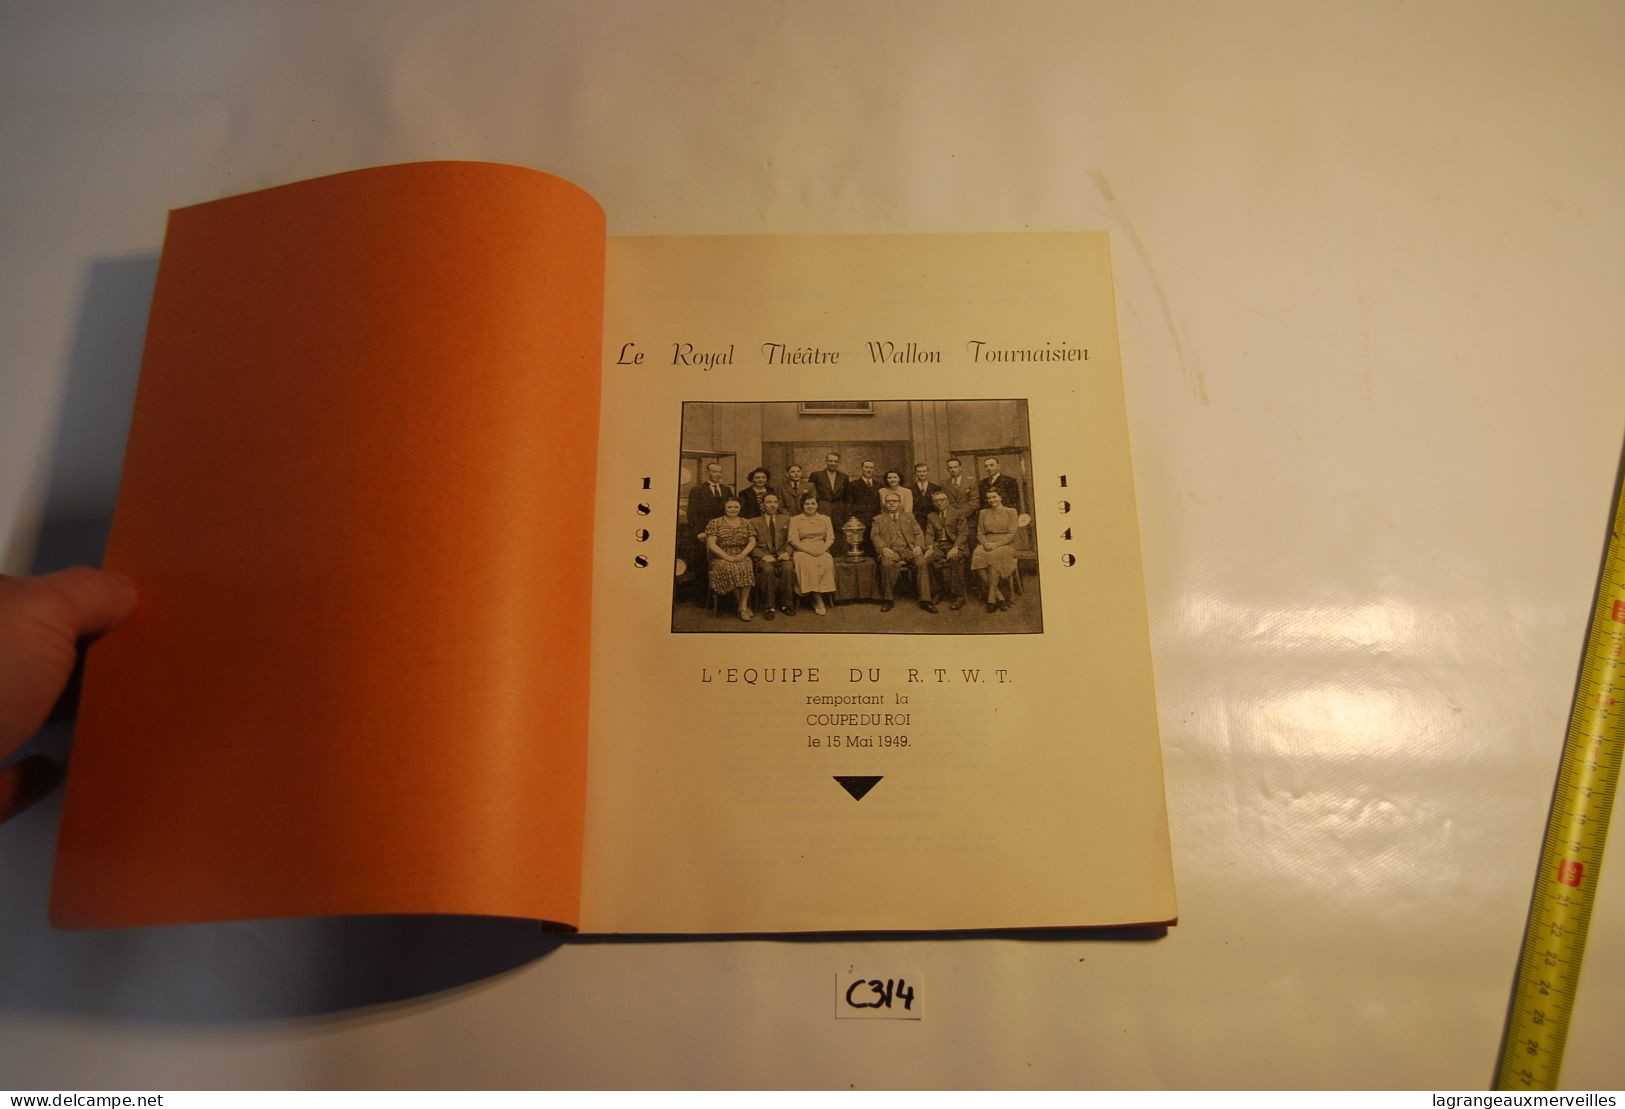 C314 Livret - Les Trois Grands - Edgard Hespel - Tournai - 1949 - Rare Book - Franse Schrijvers